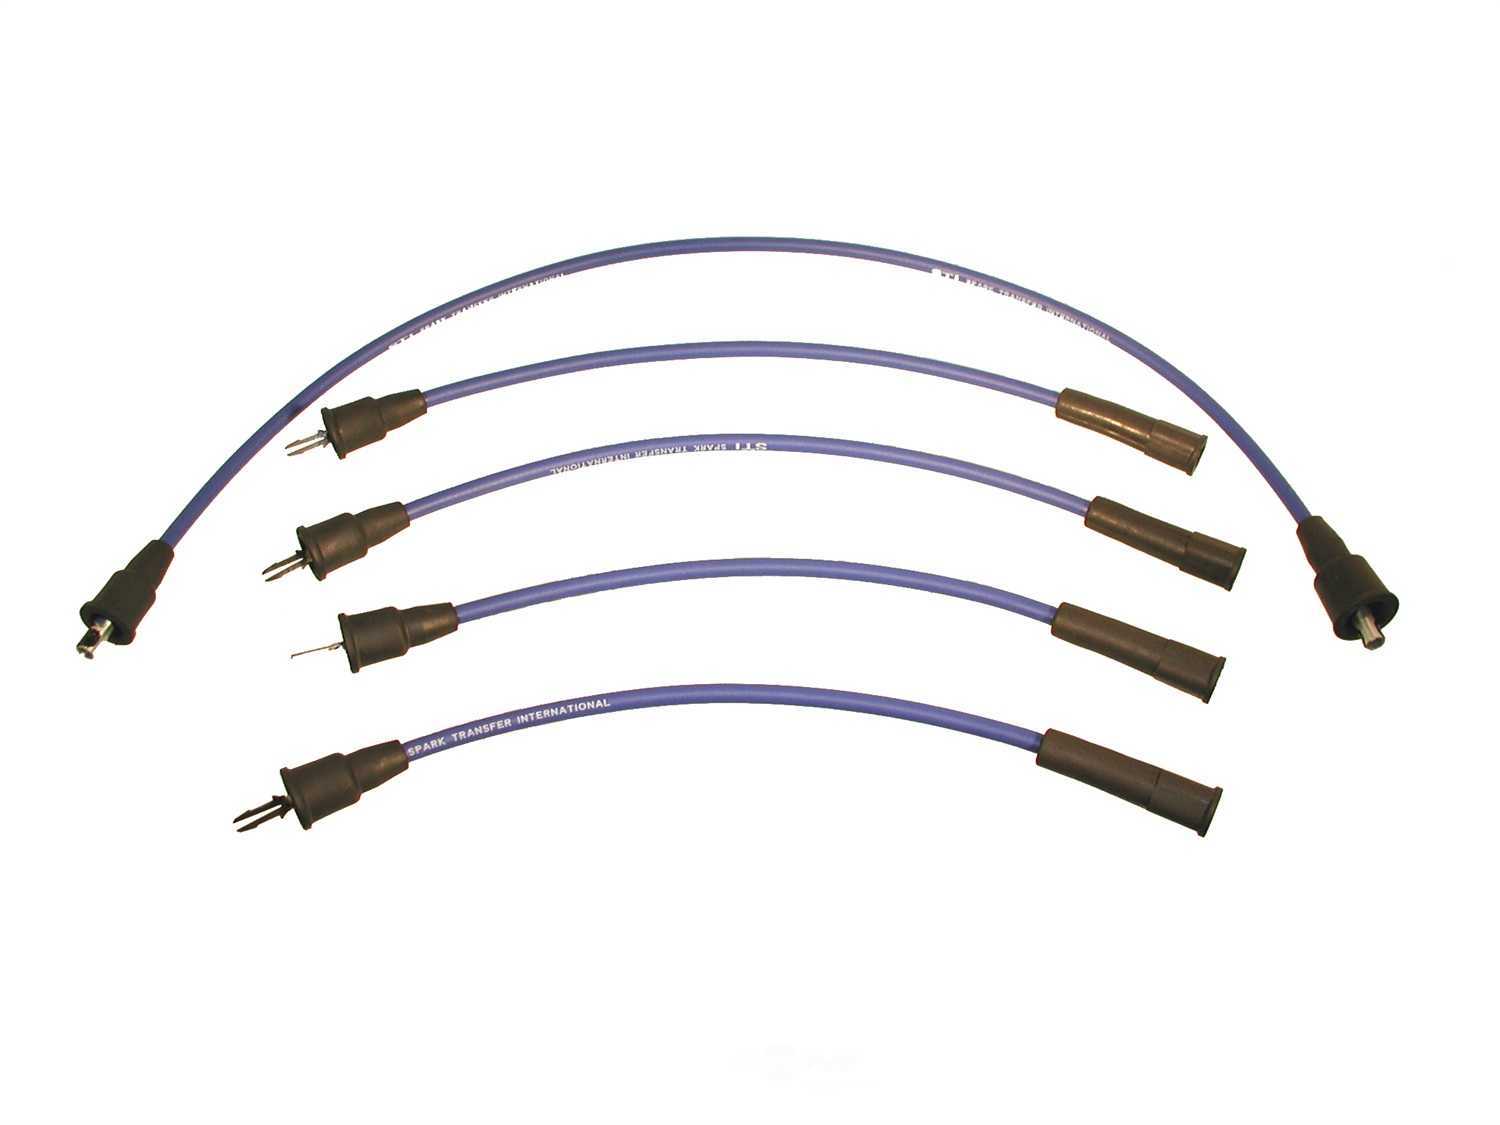 KARLYN/STI - Karlyn-STI Spark Plug Wire Set - KLY 221